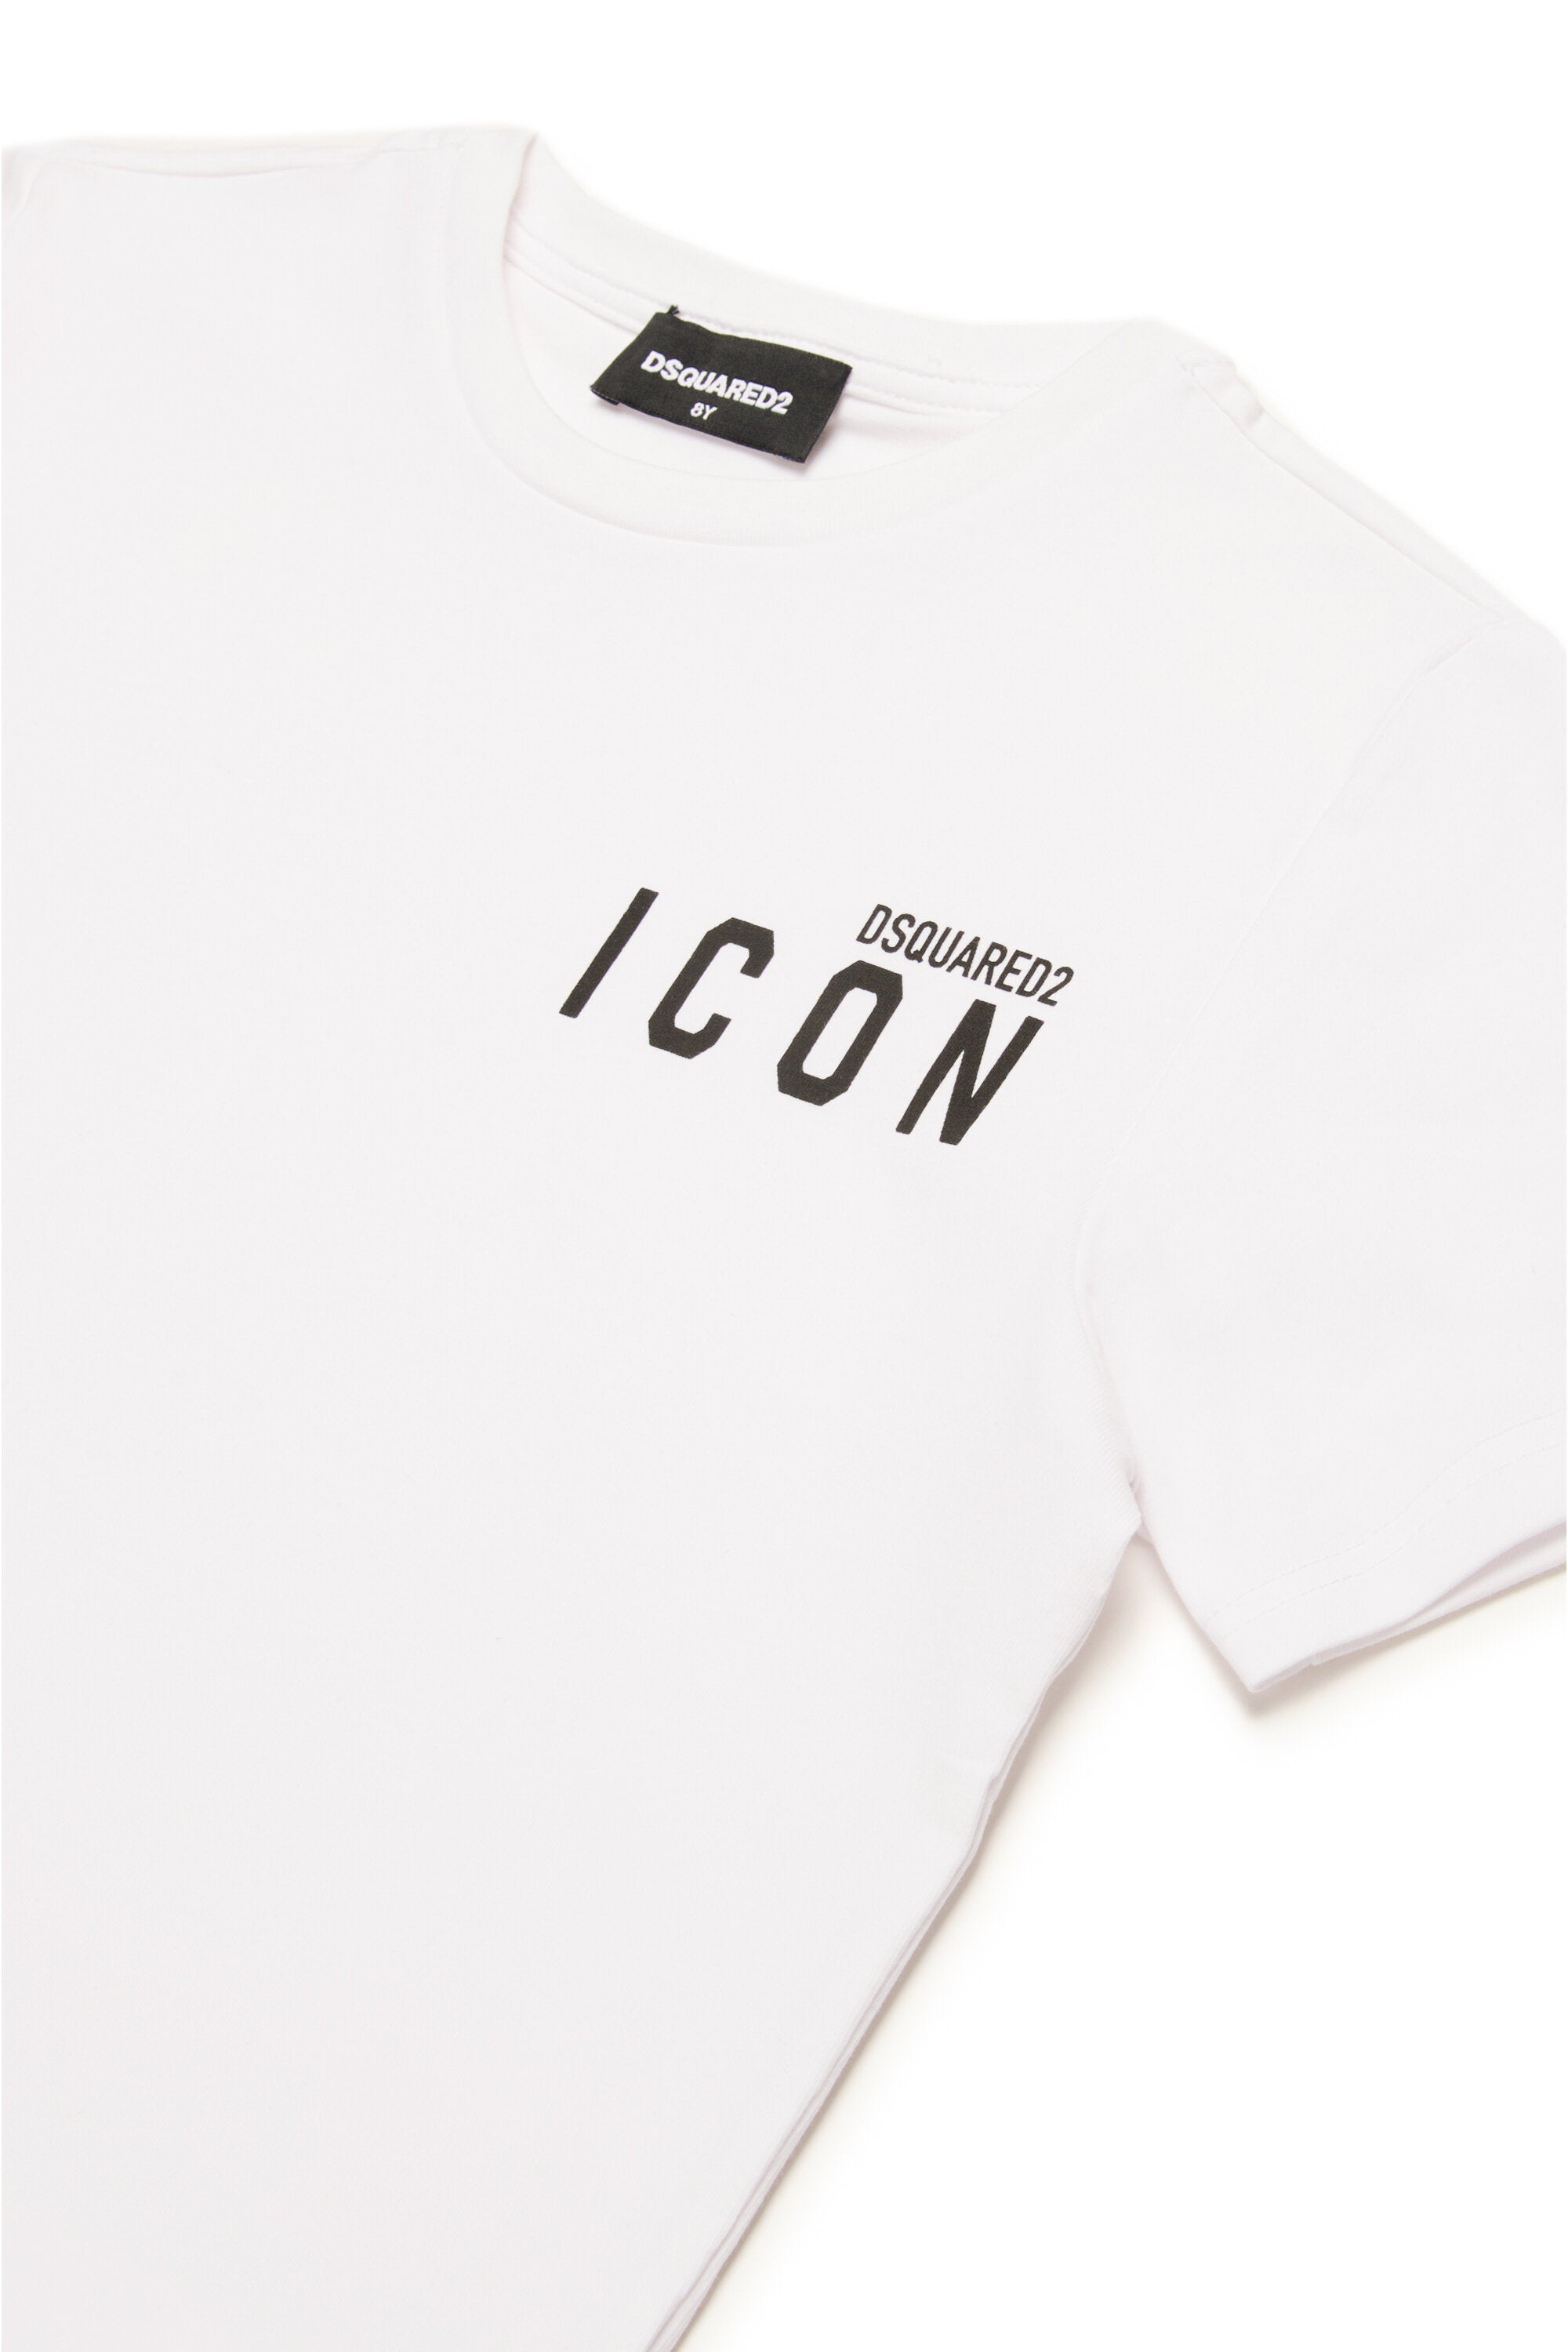 T-shirt underwear con logo ICON